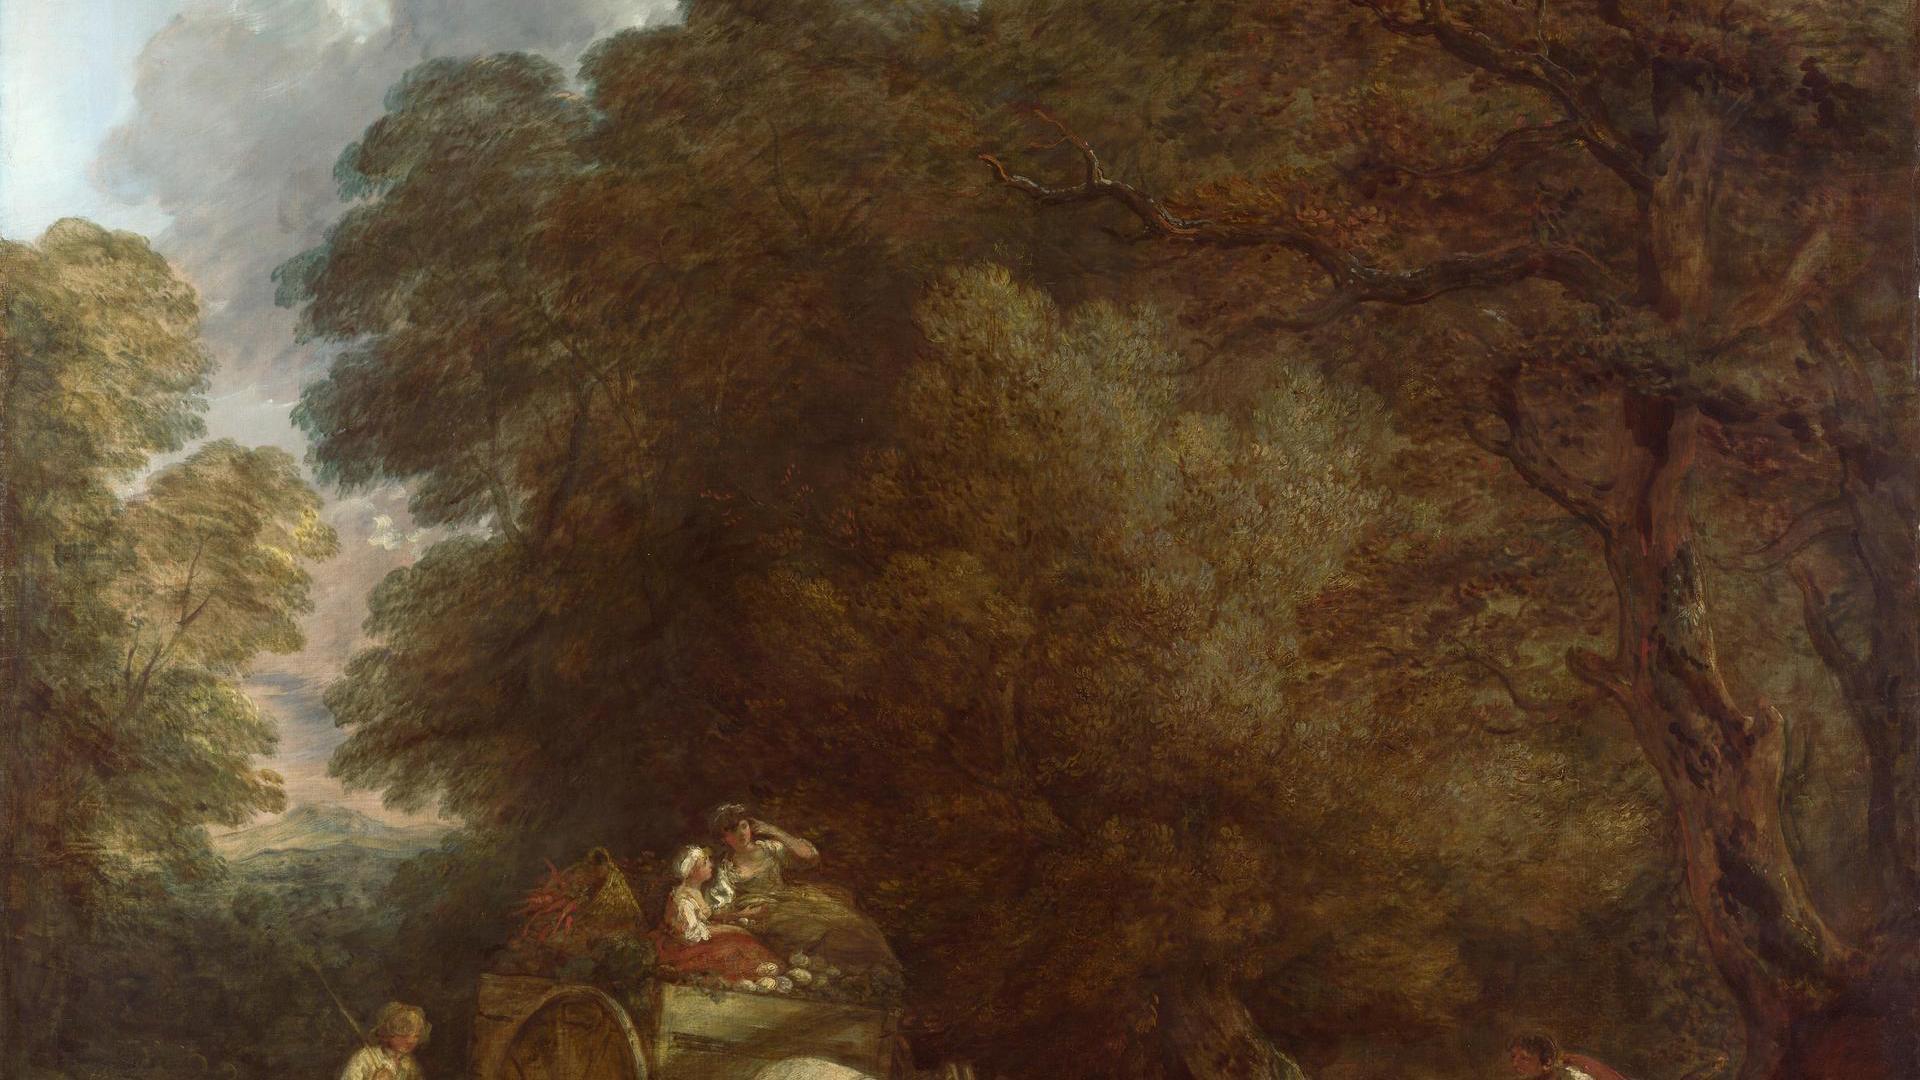 The Market Cart by Thomas Gainsborough